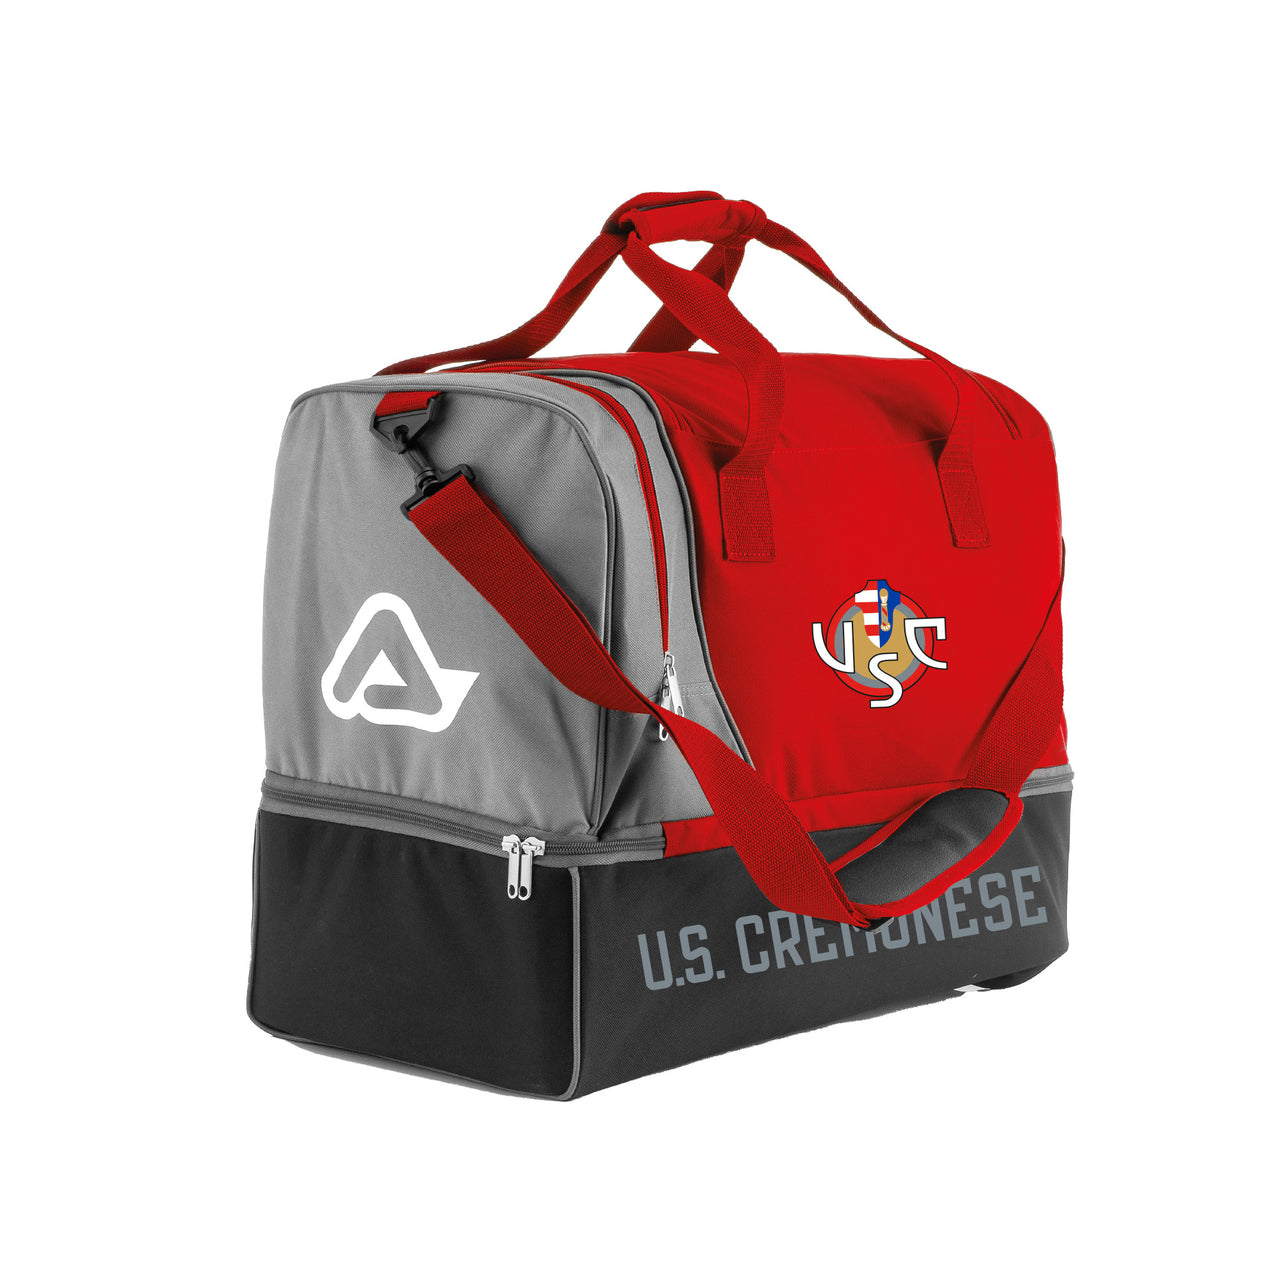 US Cremonese grey-red race bag